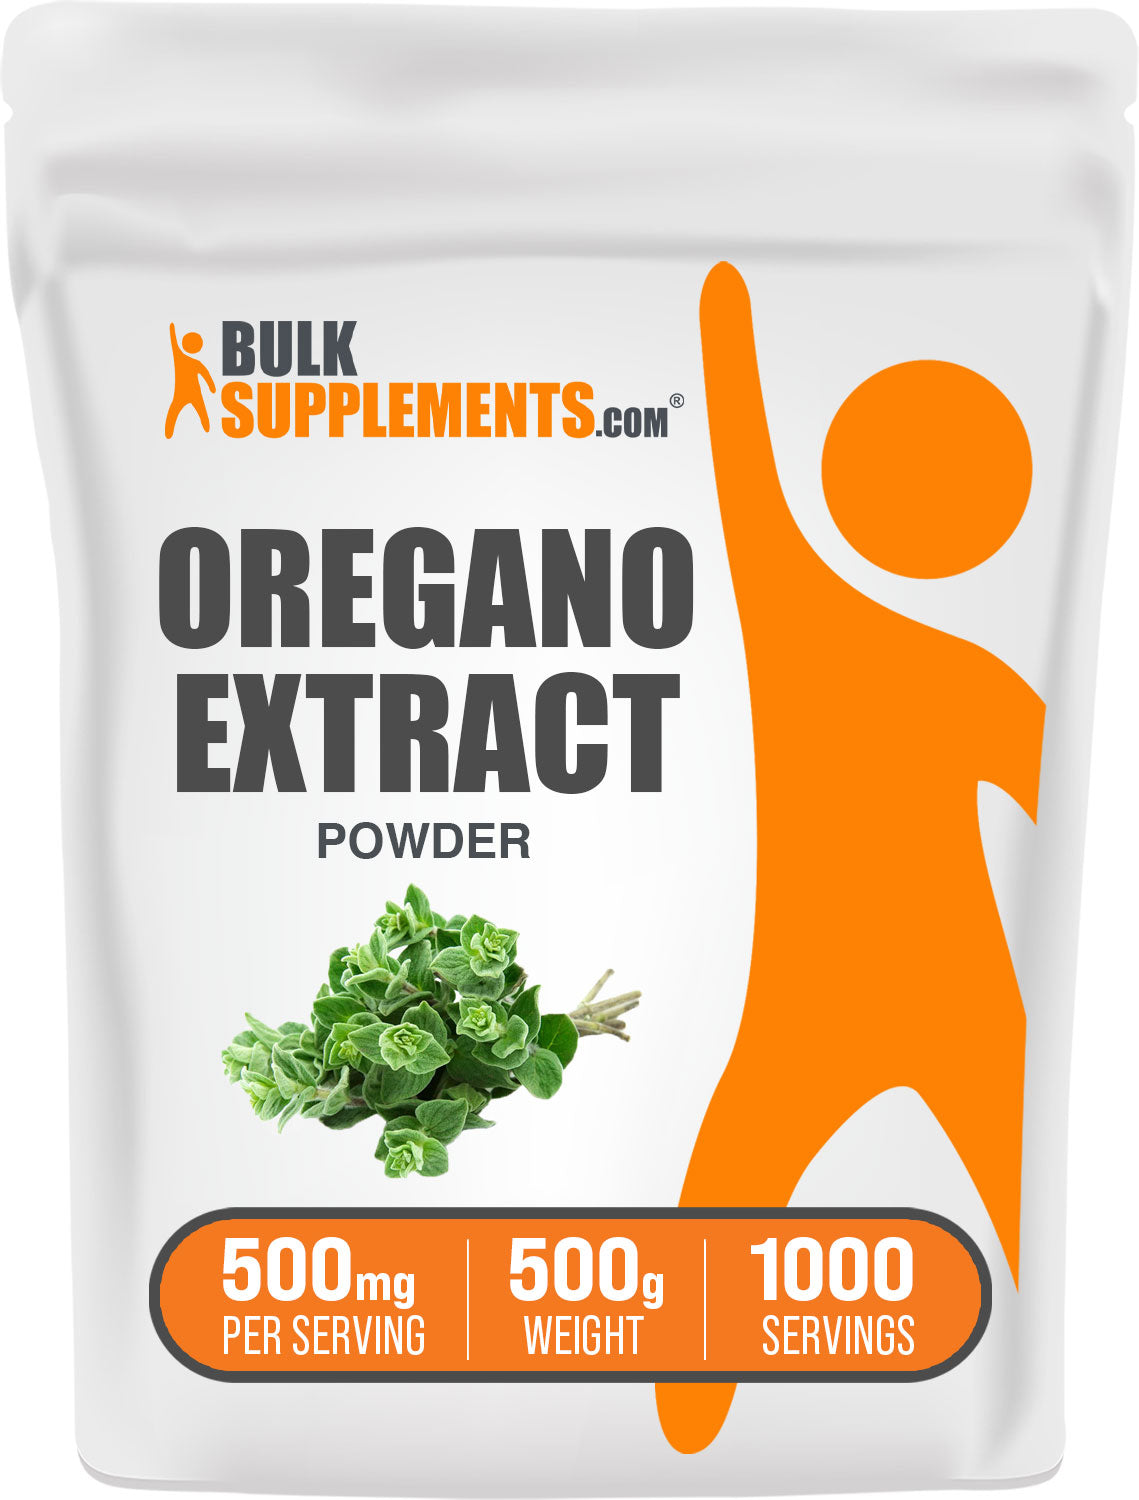 BulkSupplements.com Oregano Extract Powder 500g Bag